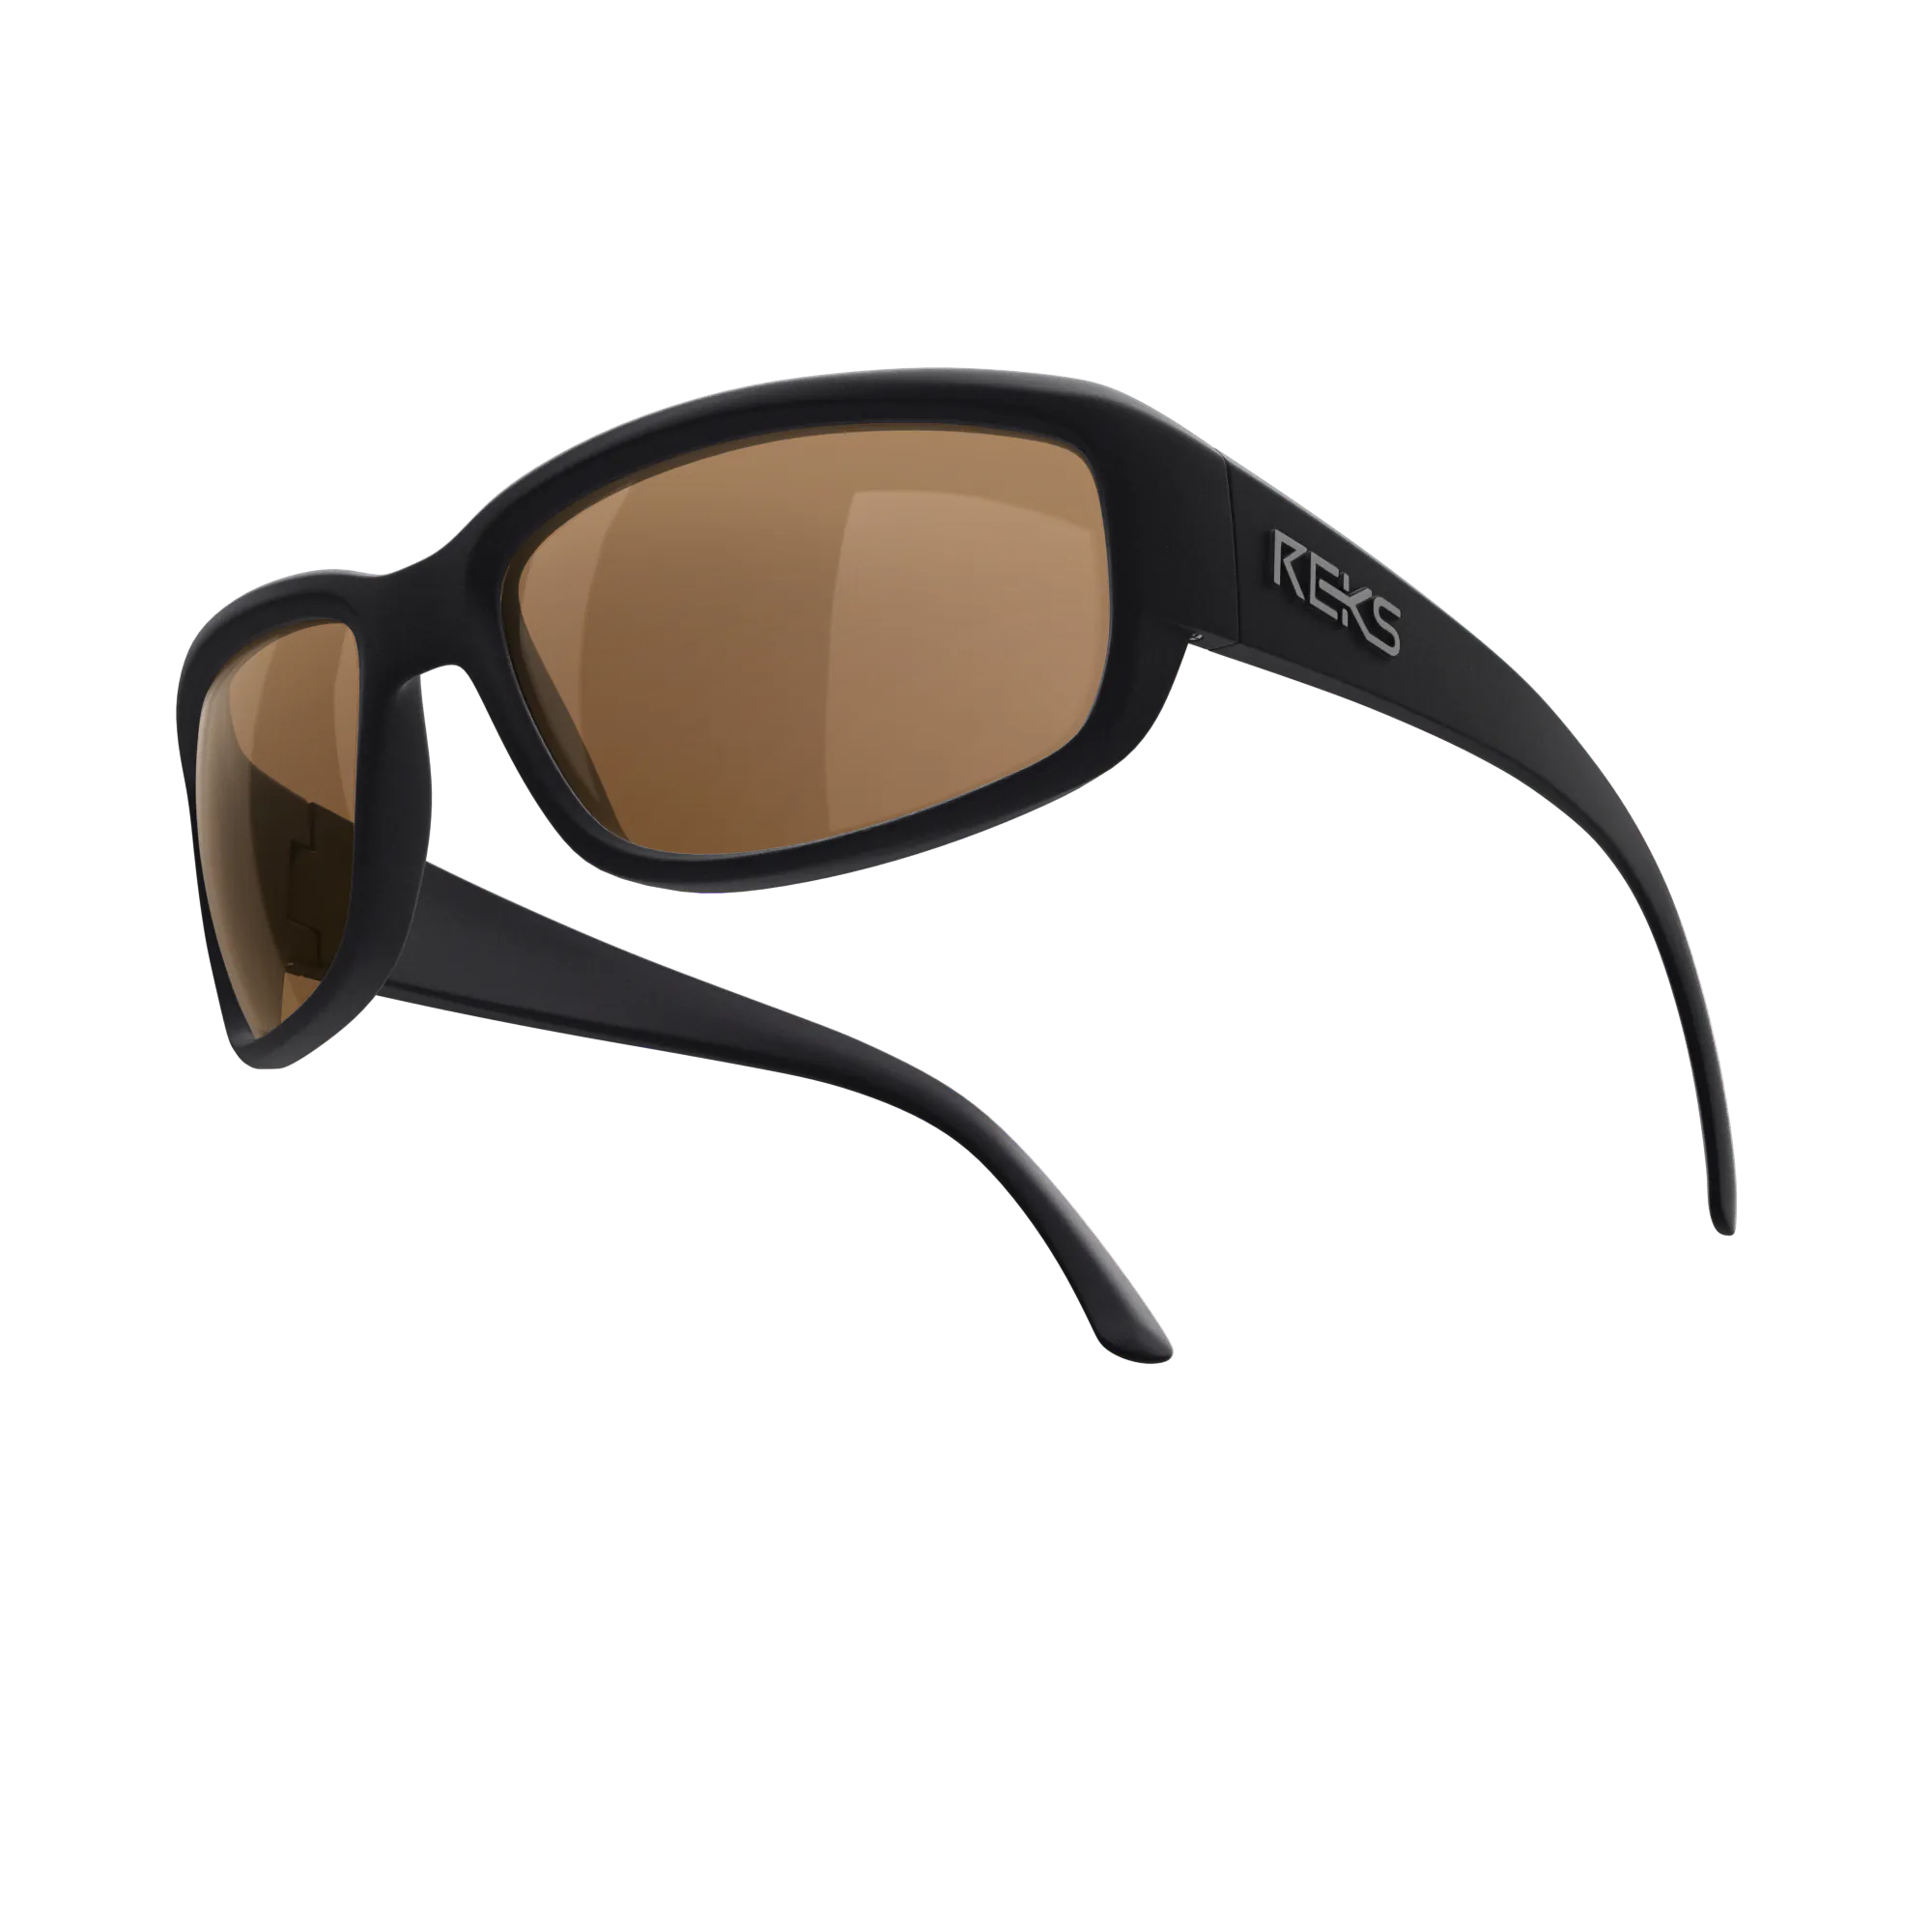 REKS Polarized Unbreakable WRAP AROUND Sunglasses, Black Frame